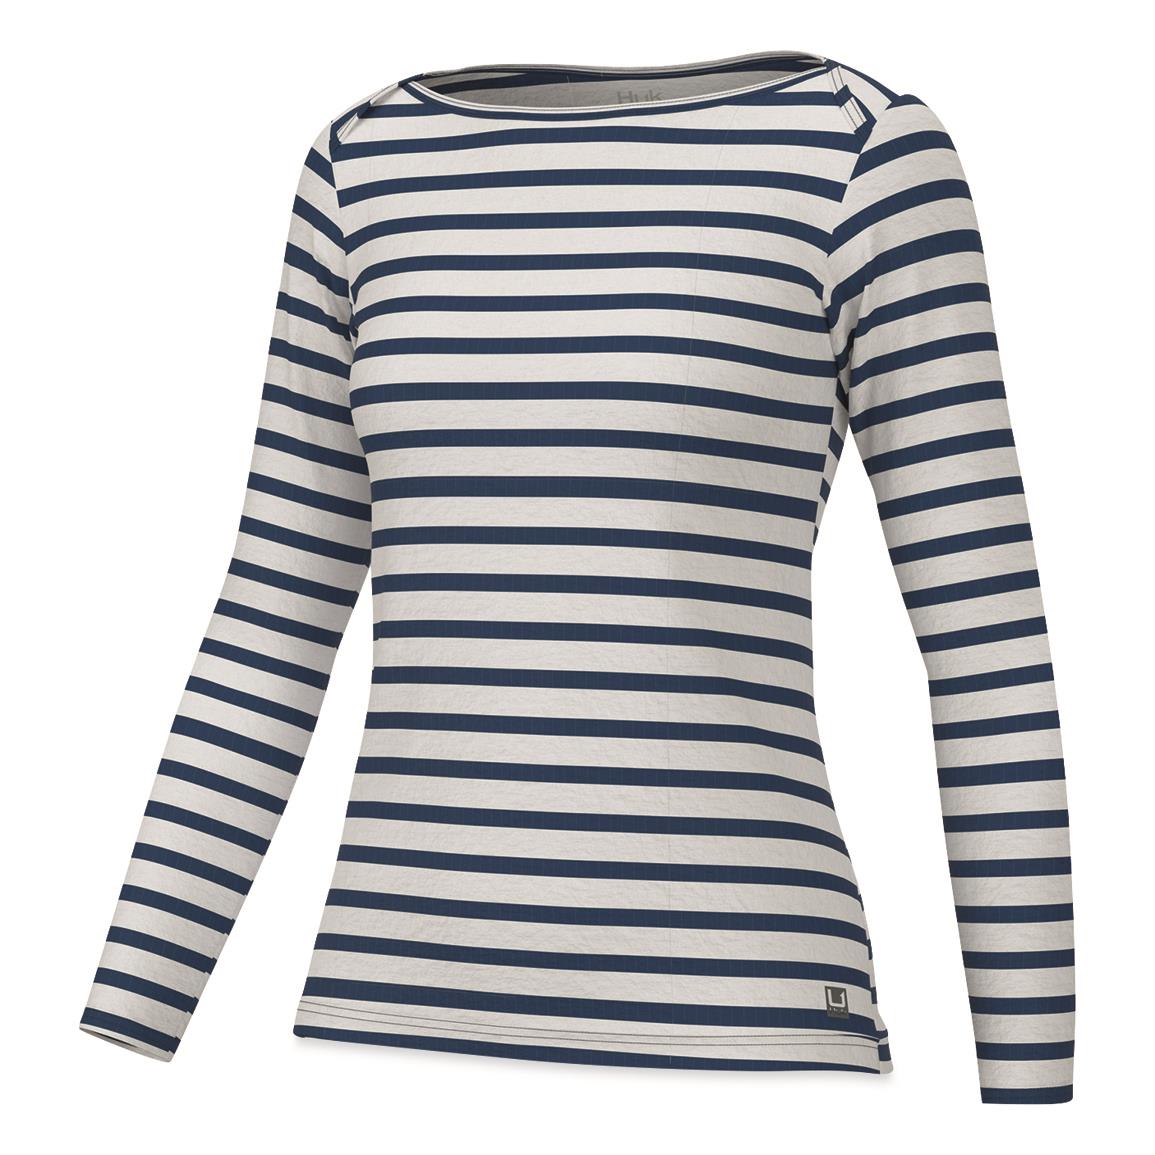 Huk Women's Waypoint Boatneck French Sea Long Sleeve Shirt, Set Sail